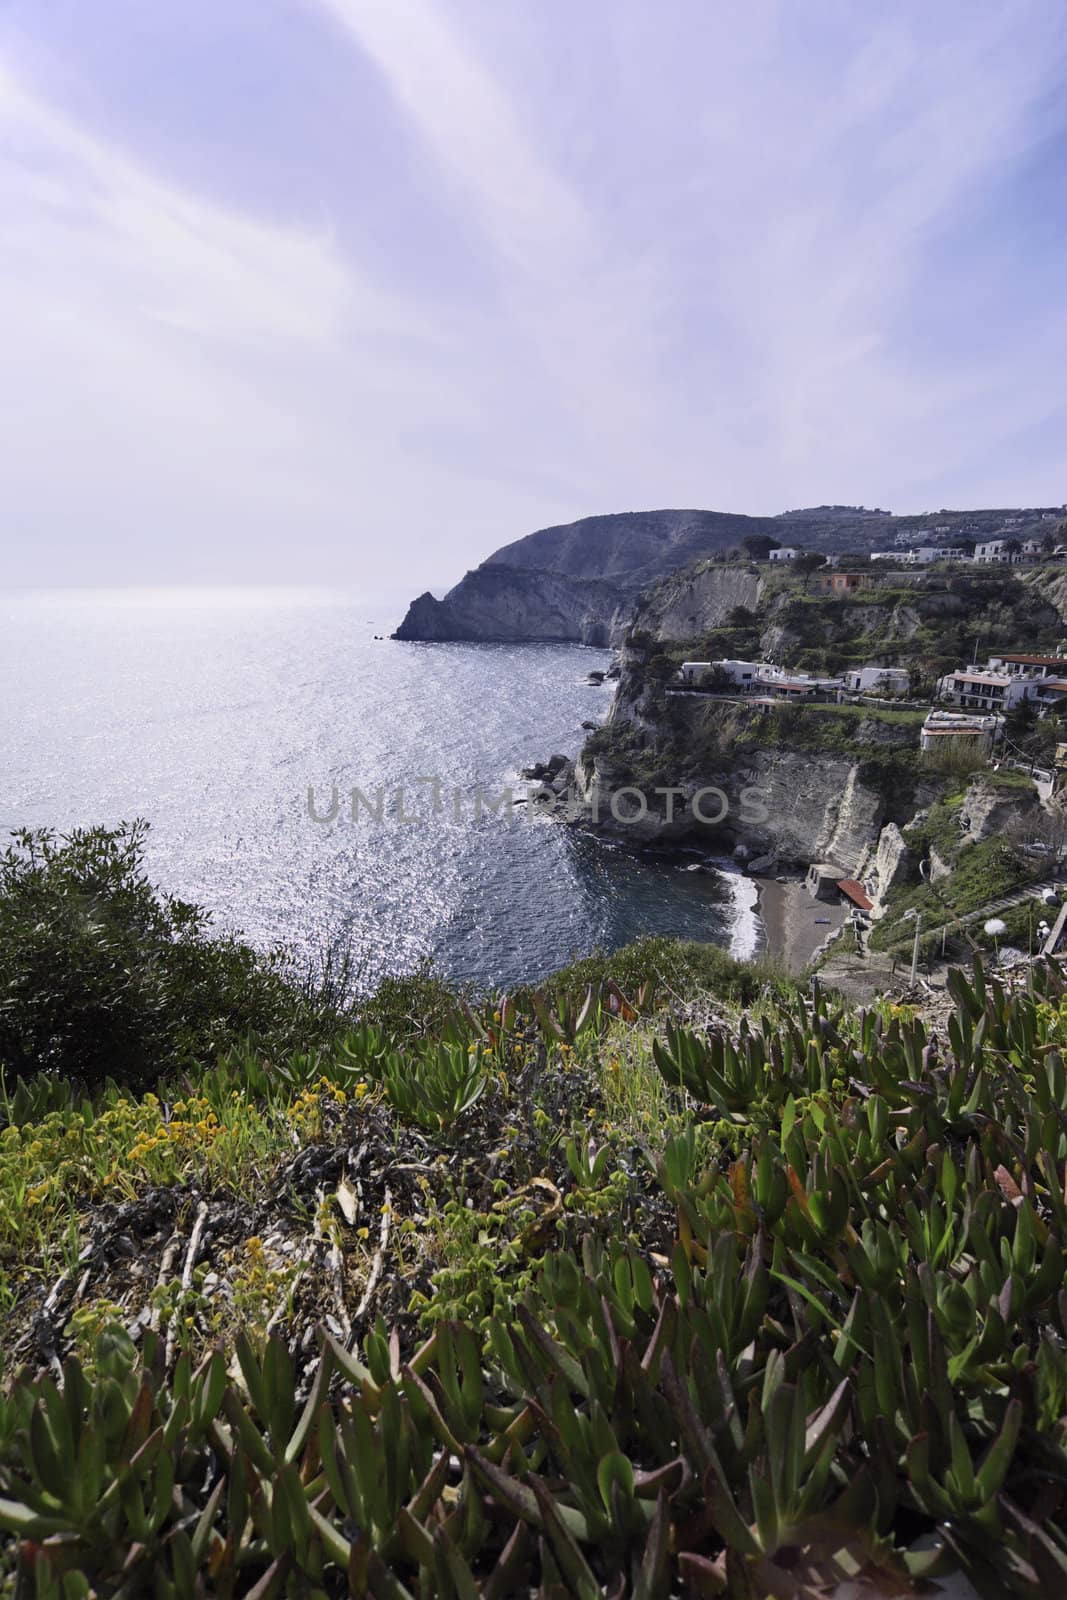 ITALY, Campania, Ischia island, S.Angelo, view of S.Angelo rocky coast by agiampiccolo